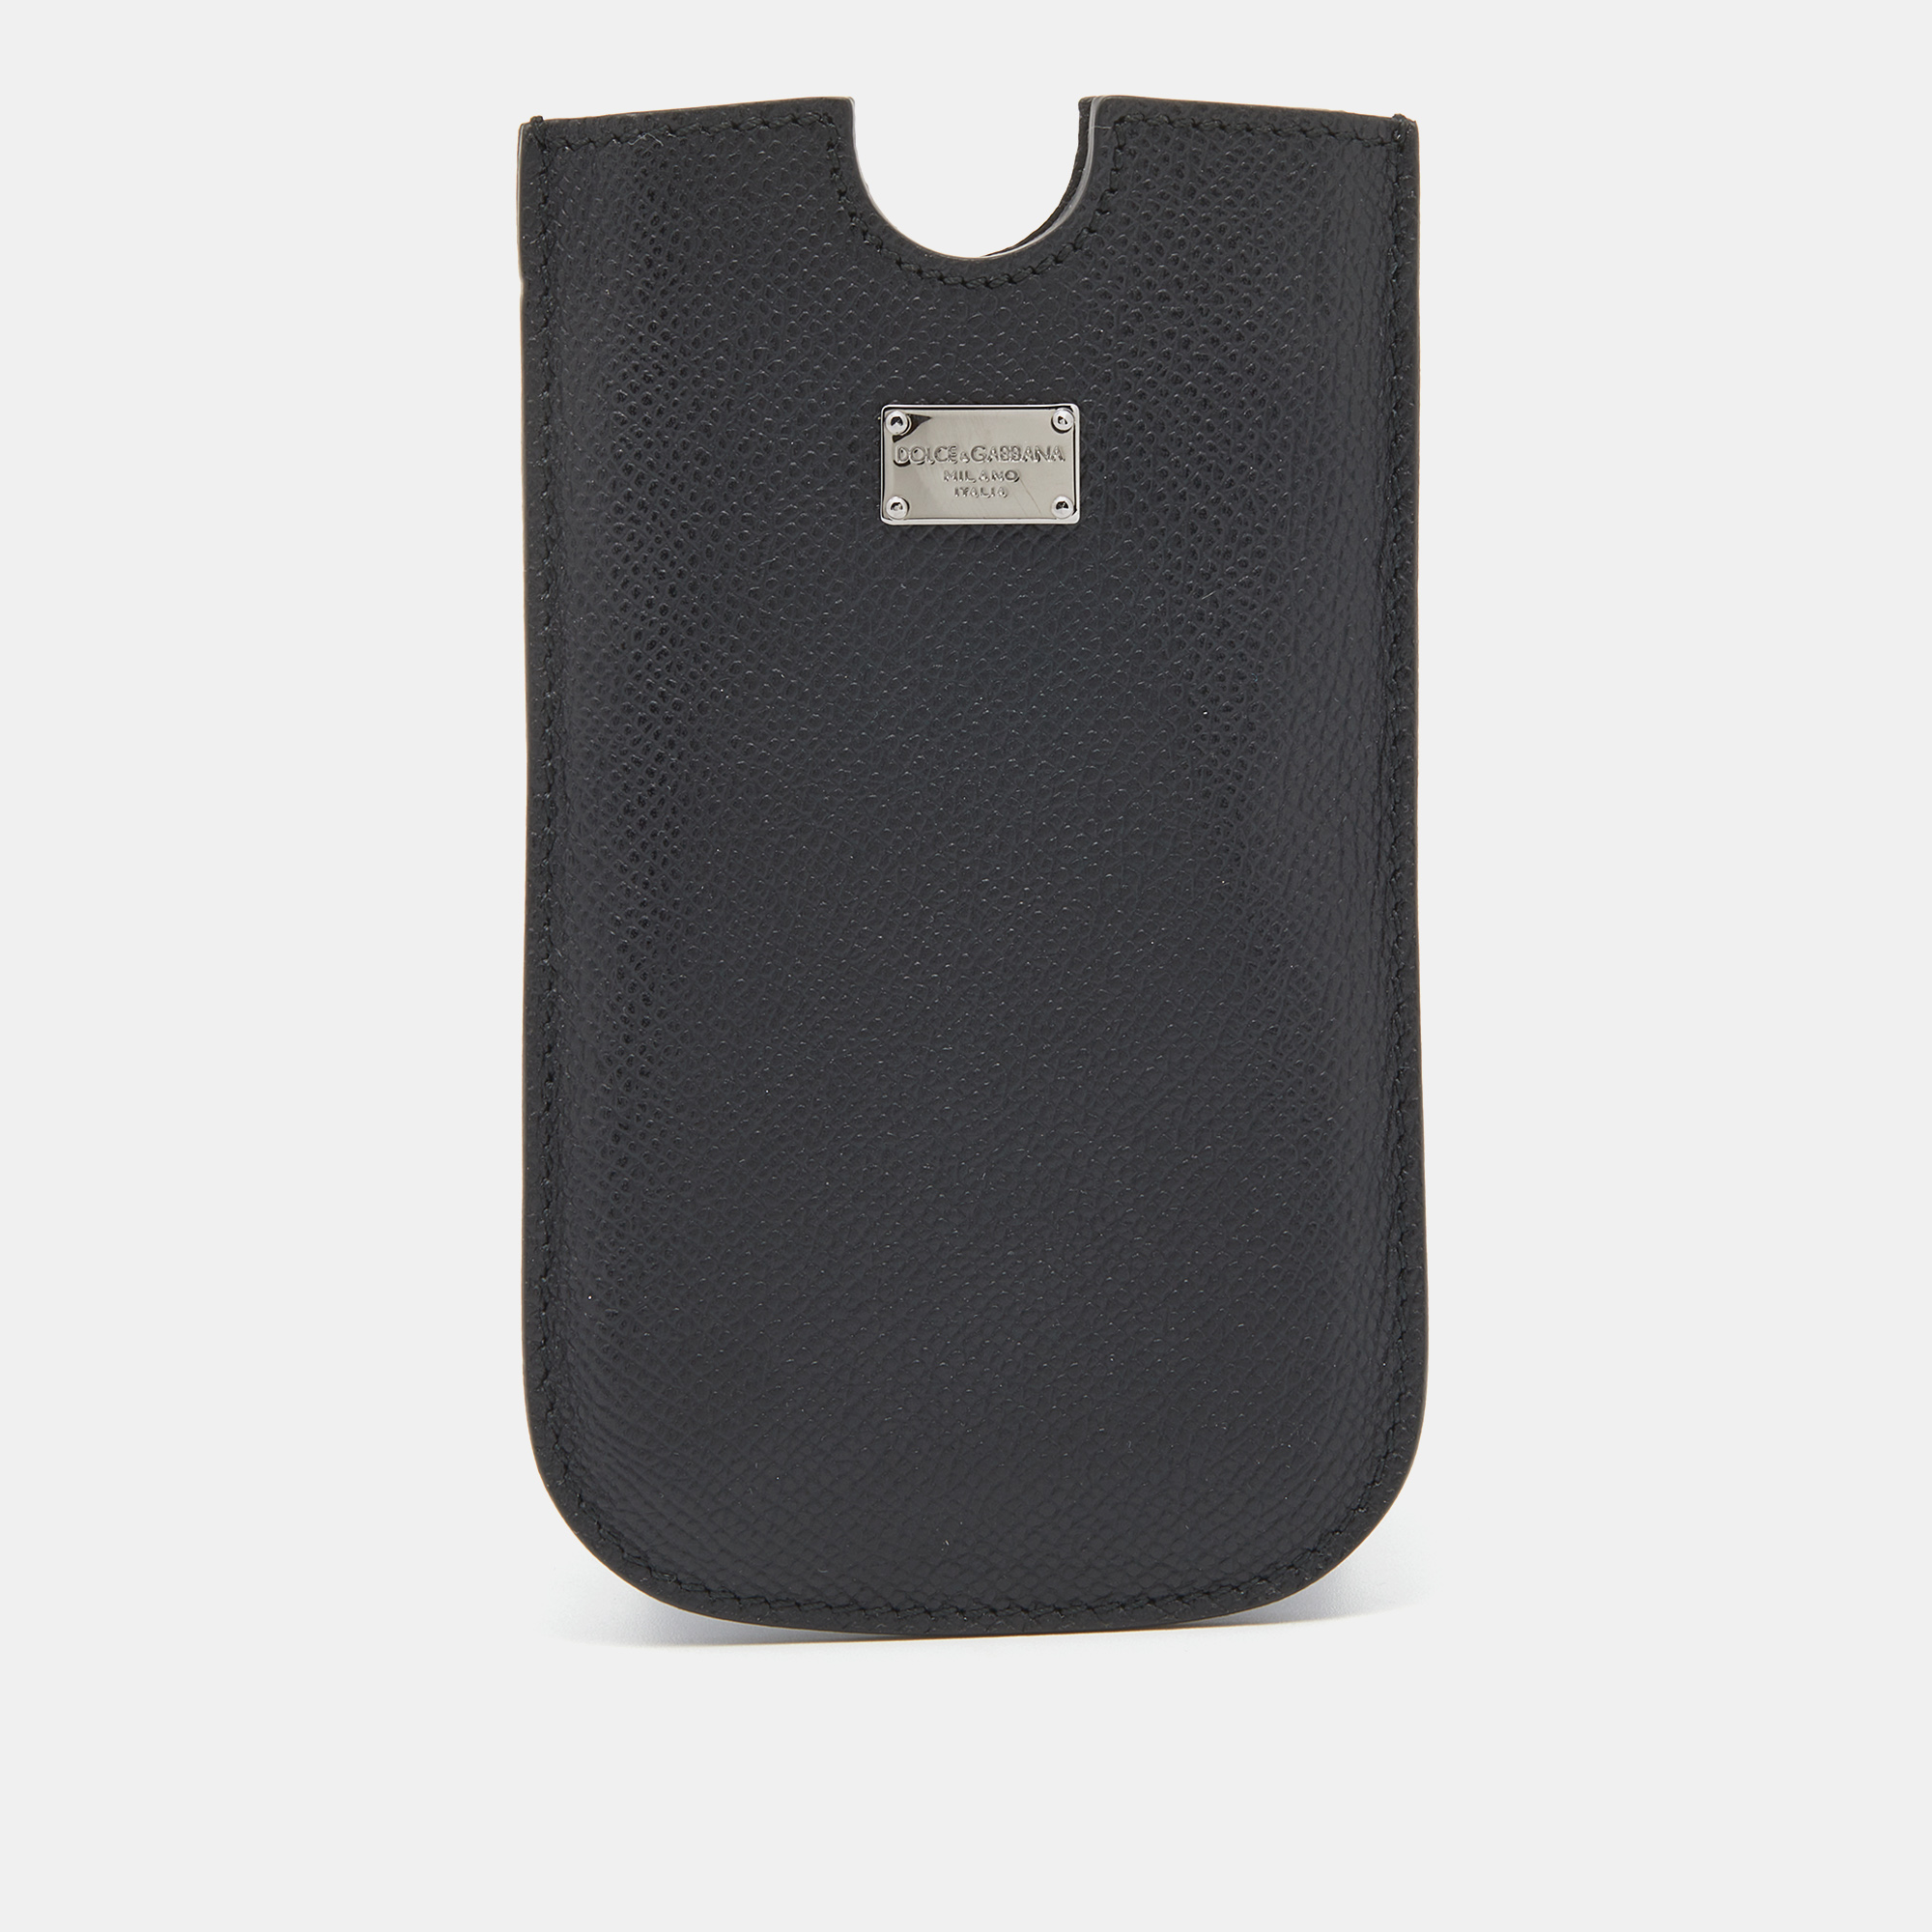 Dolce & gabbana black leather siii smartphone case